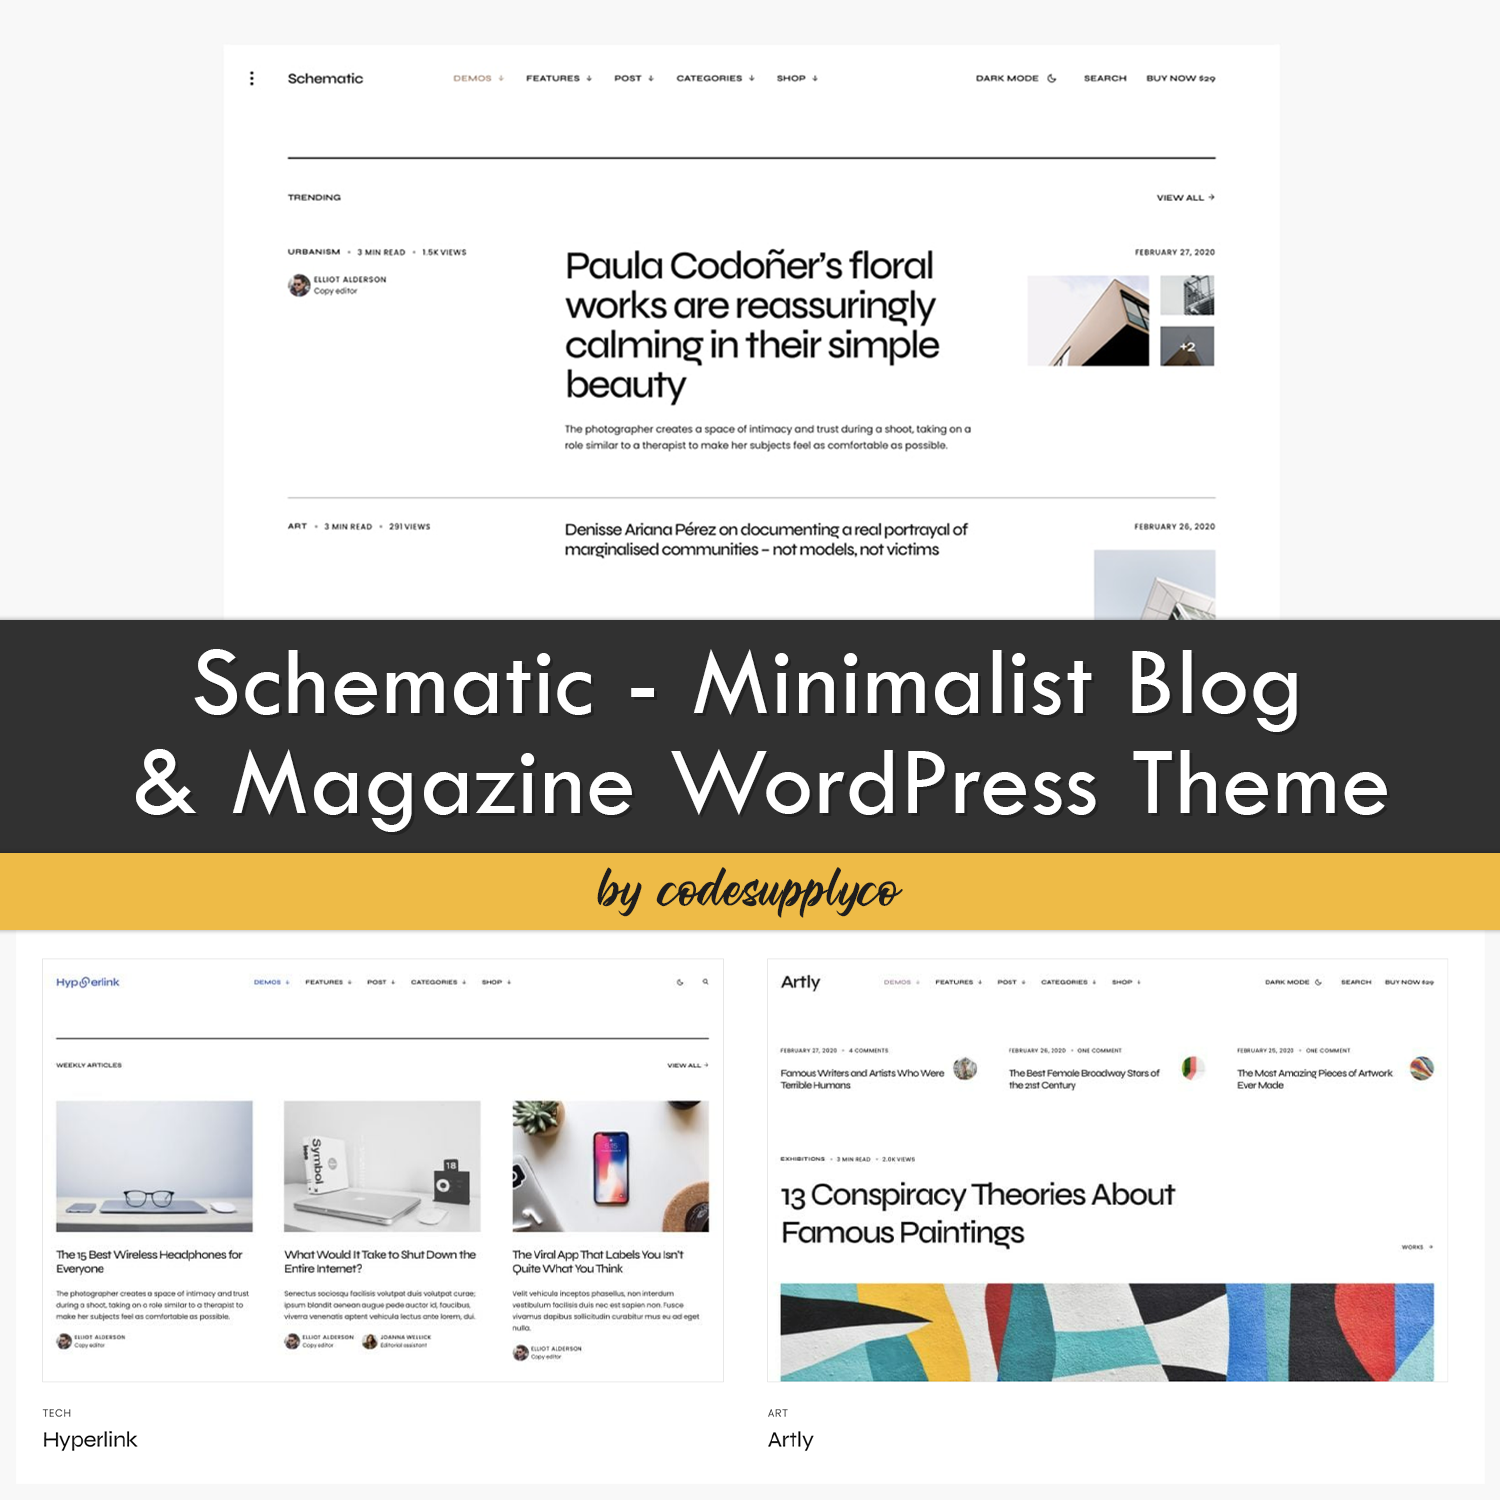 Schematic - Minimalist Blog & Magazine WordPress Theme cover.